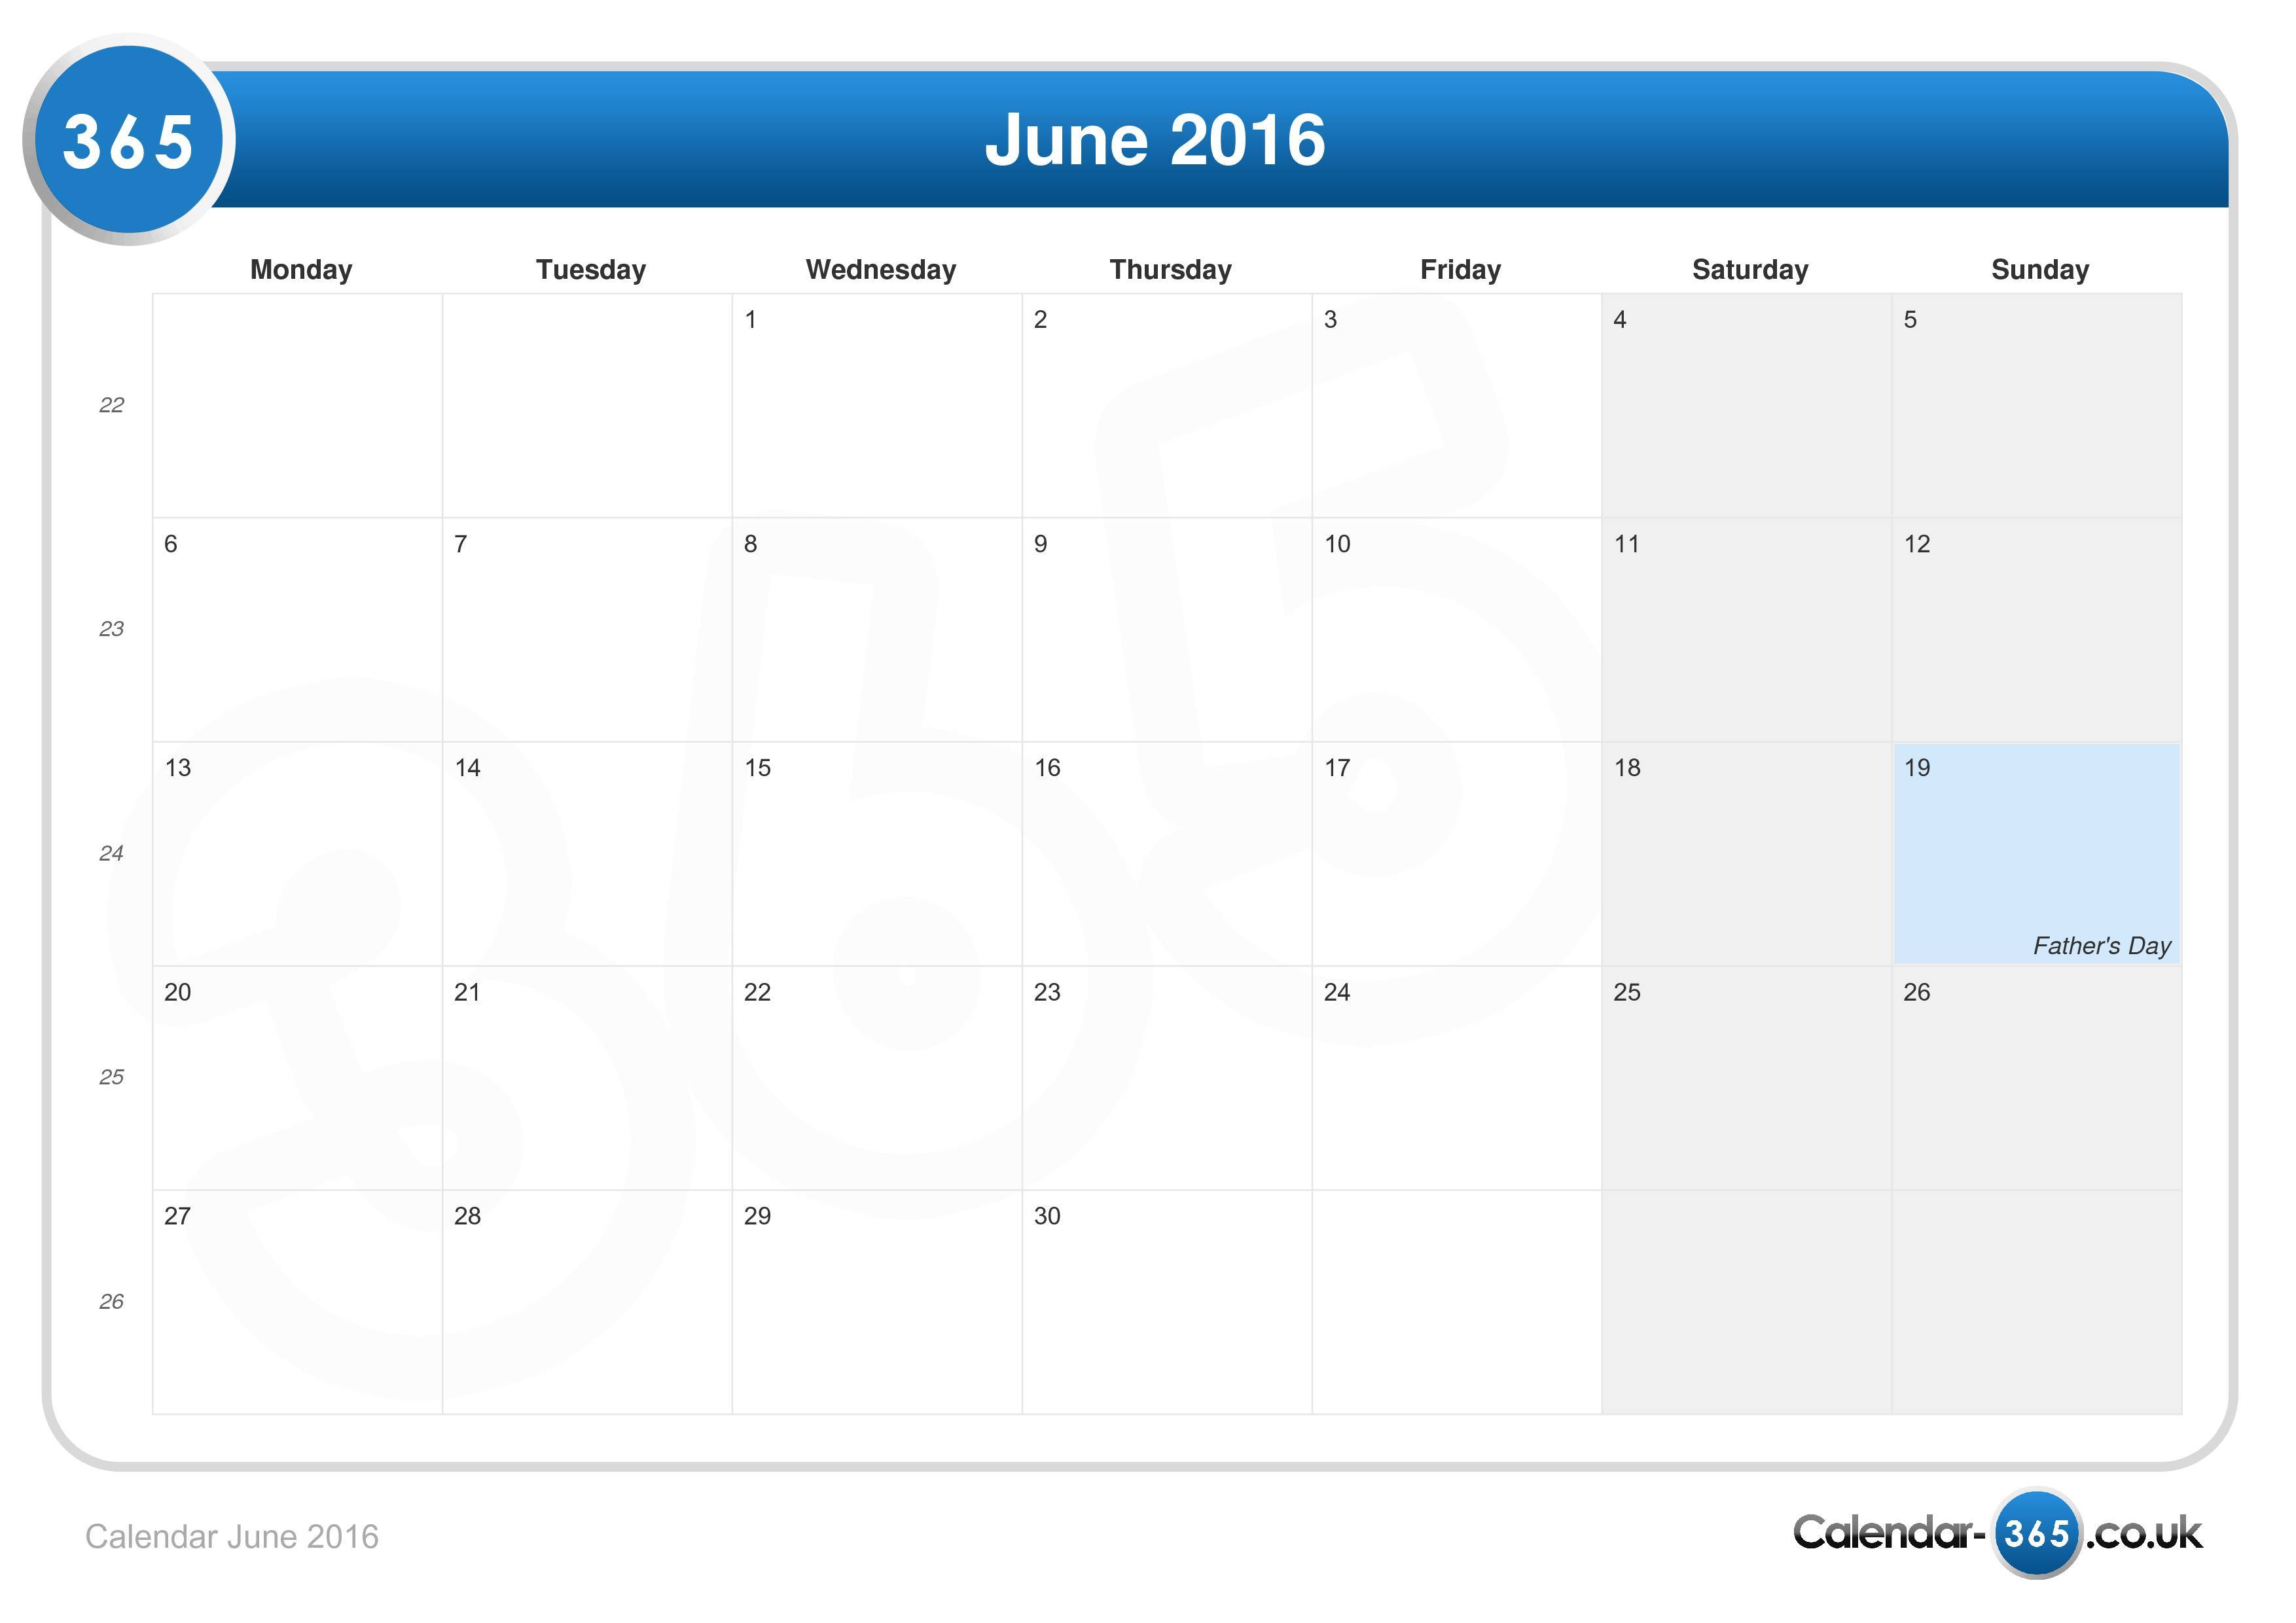 Calendar June 2016